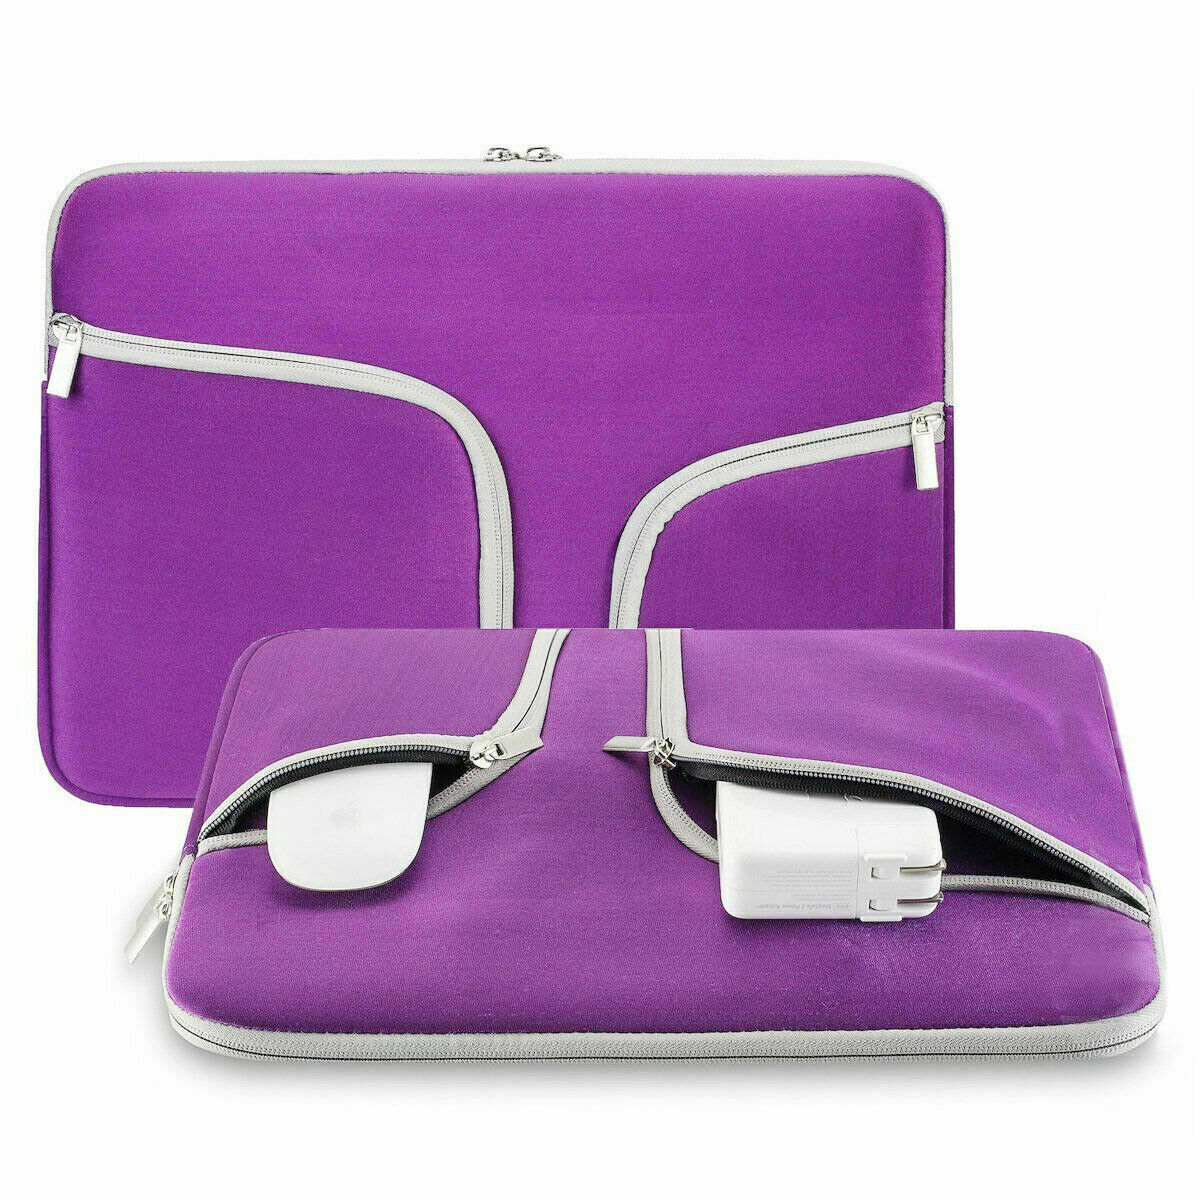 Handbag Carry Laptop Bag Sleeve Case For MacBook Air Pro HP Lenovo Acer Dell